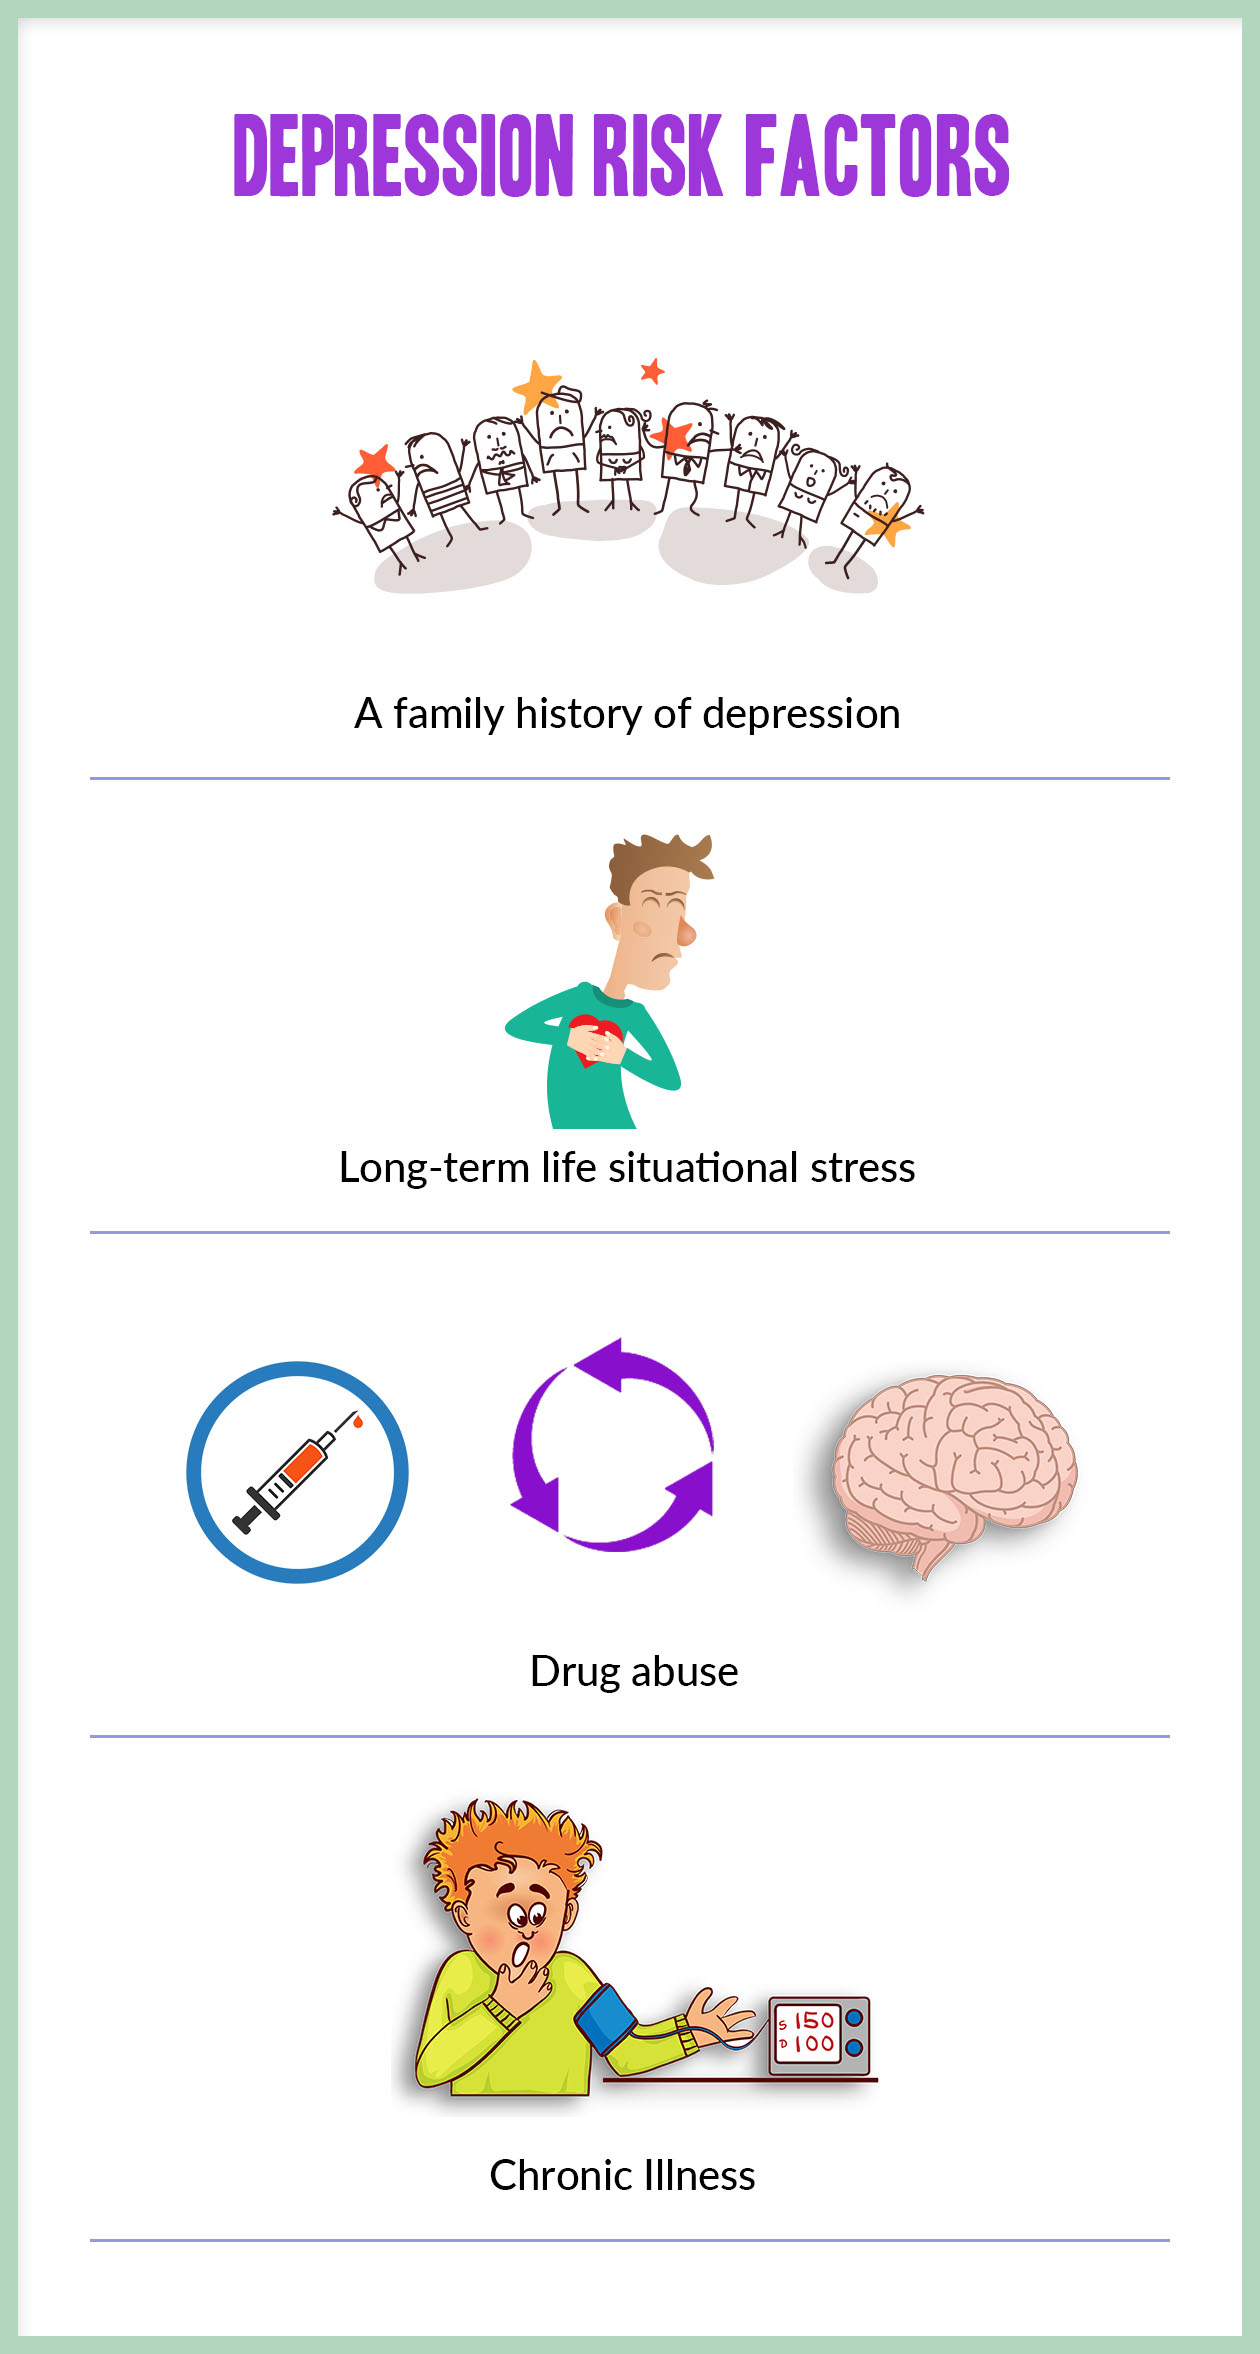 Factors that contribute to the development of a depressive illness